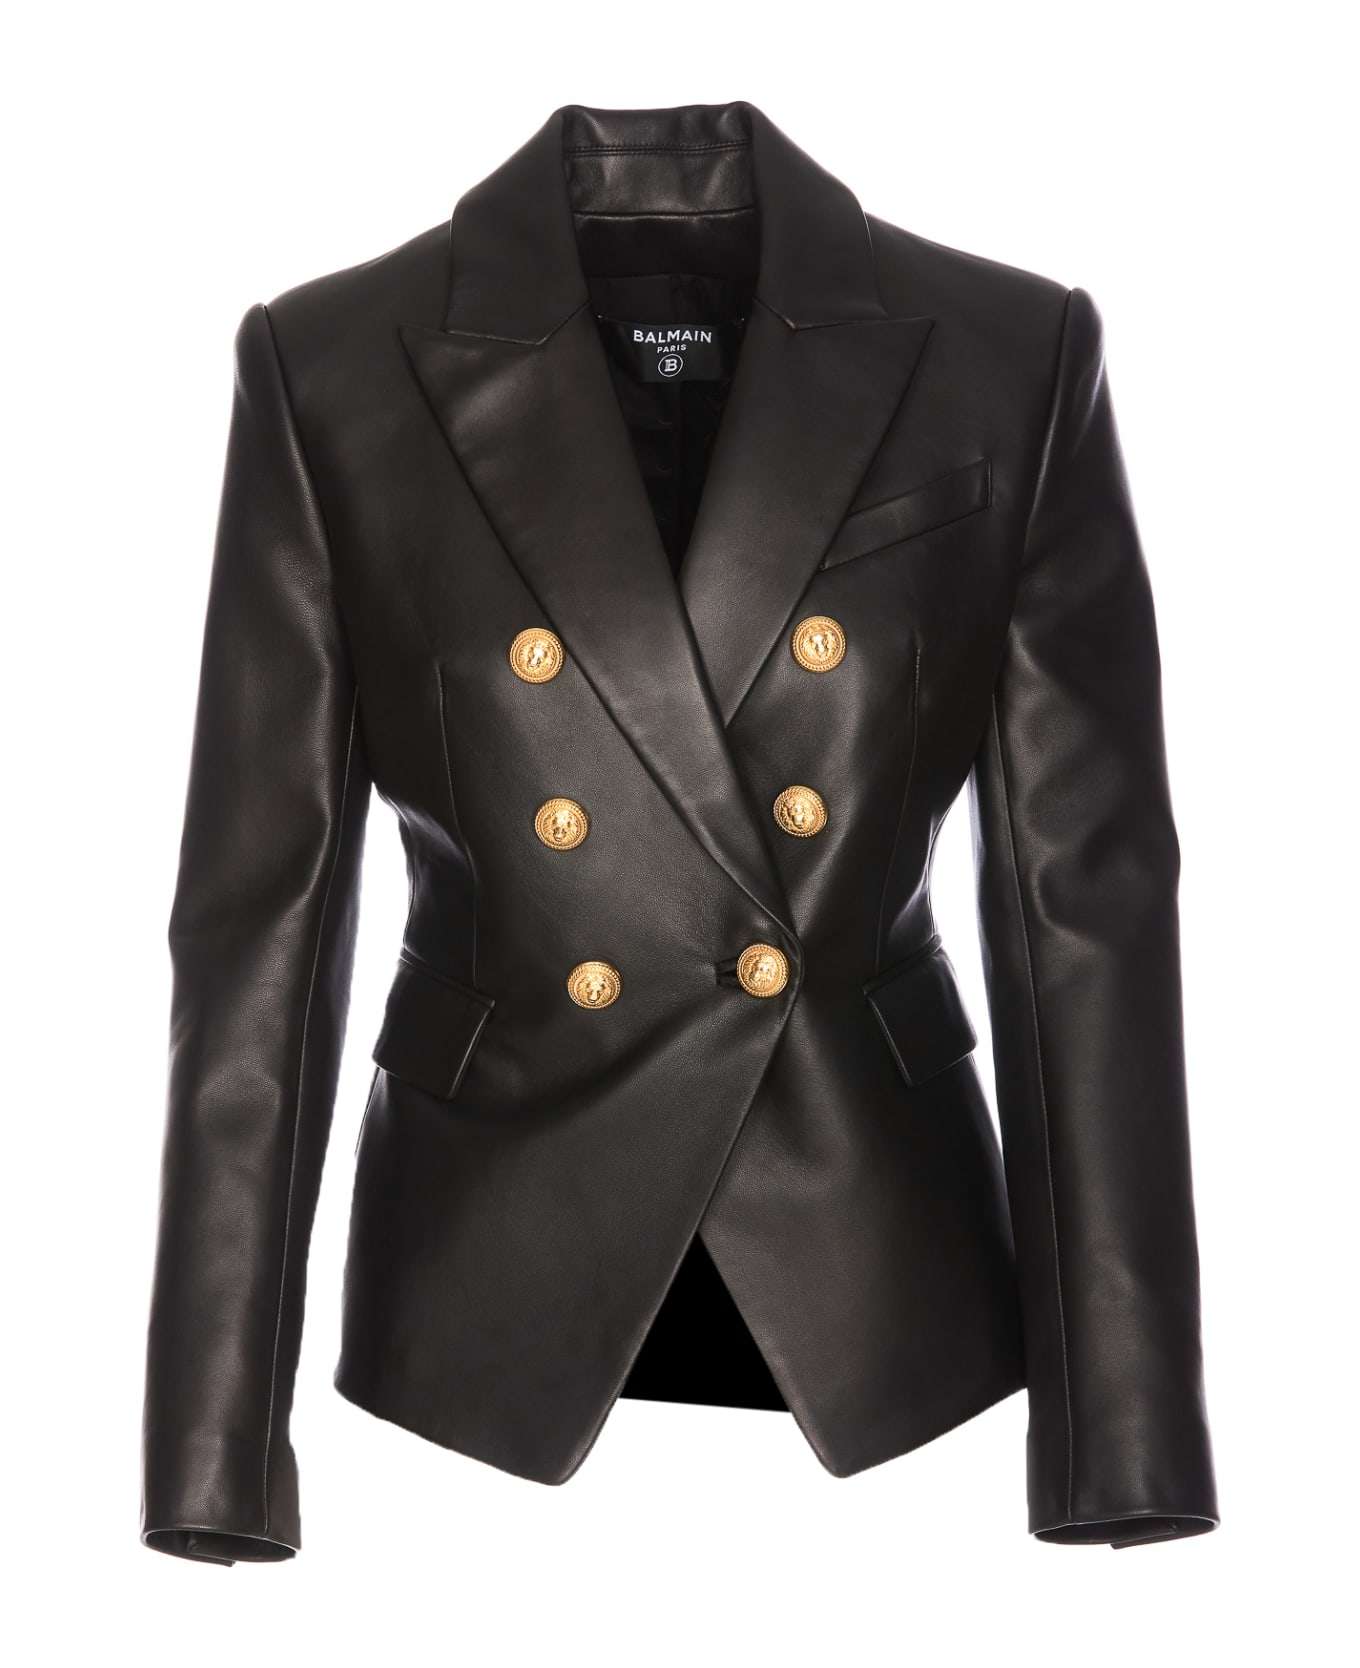 Balmain 6 Buttons Classic Leather Jacket - Black